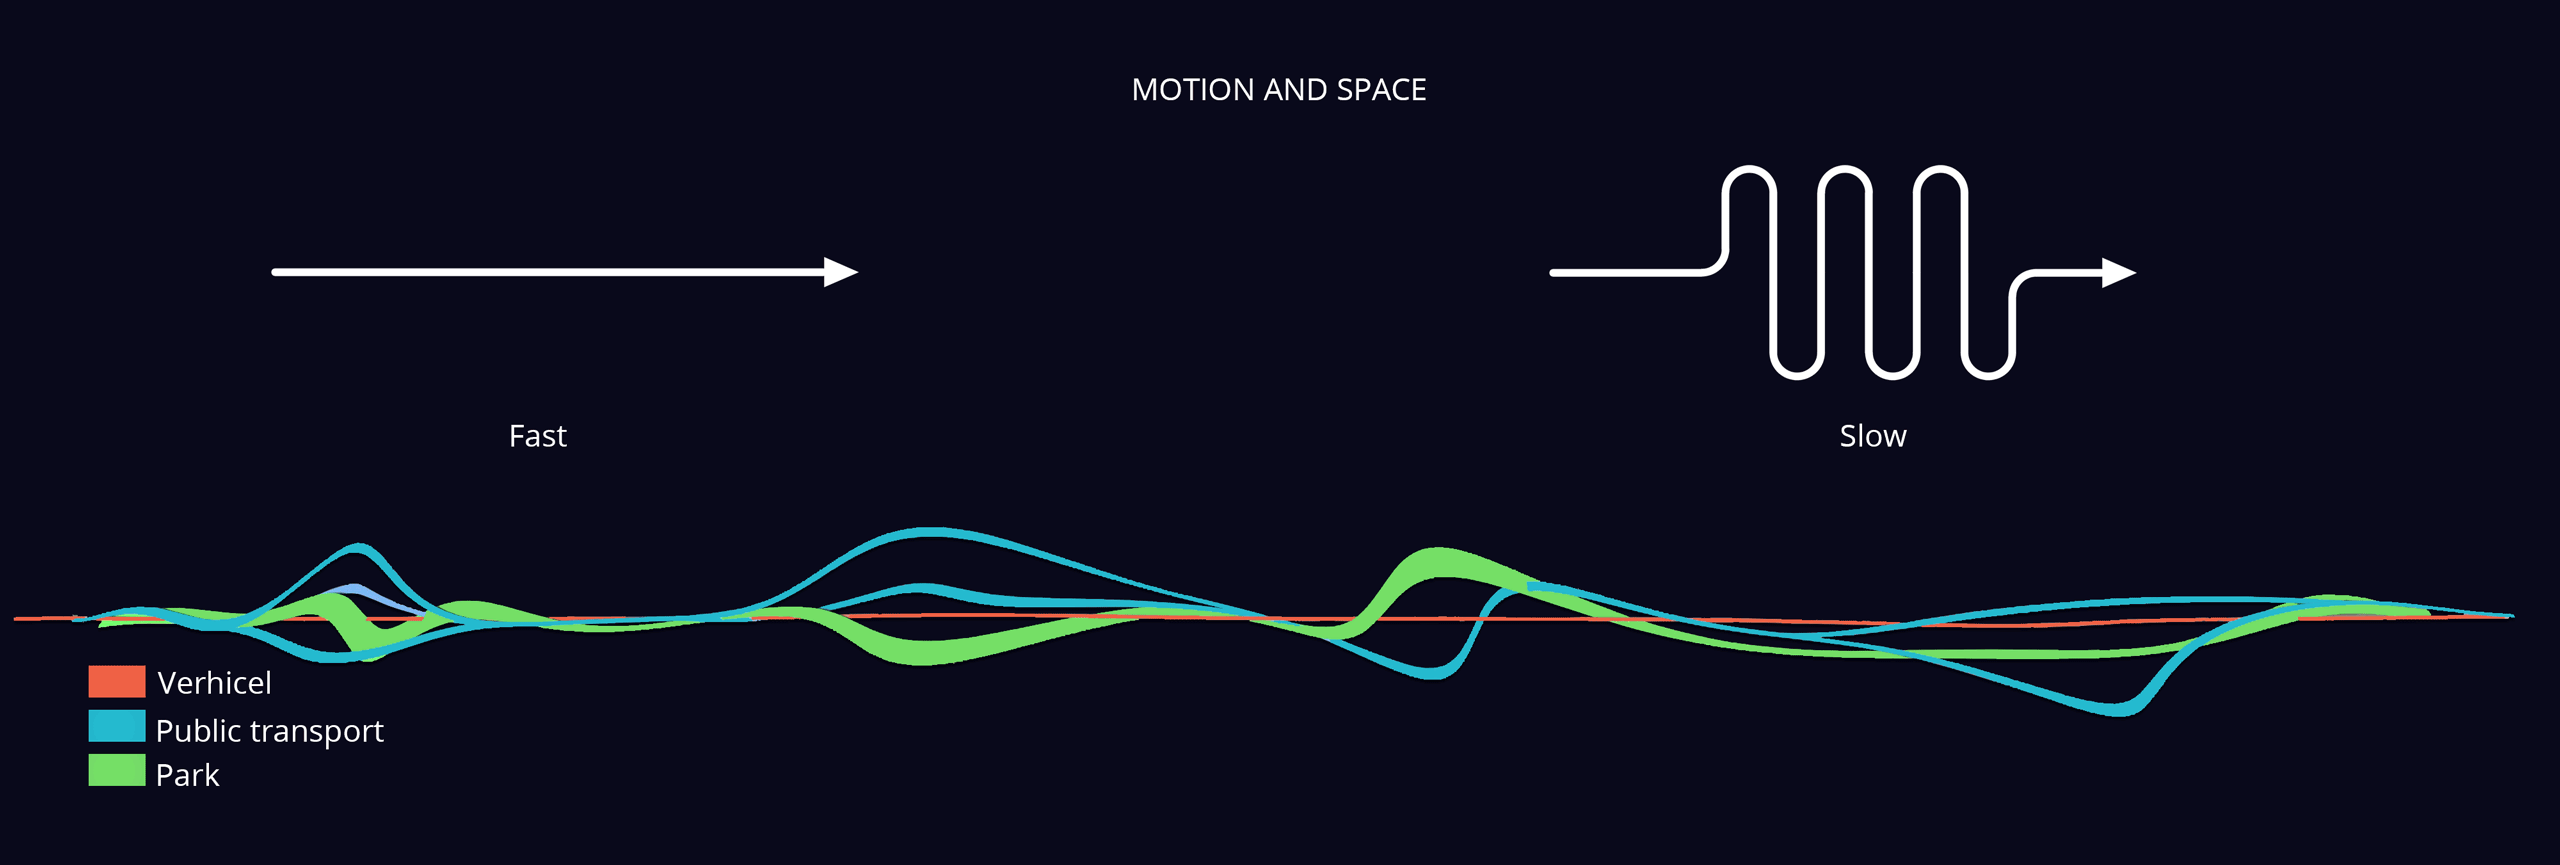 AJM_motion